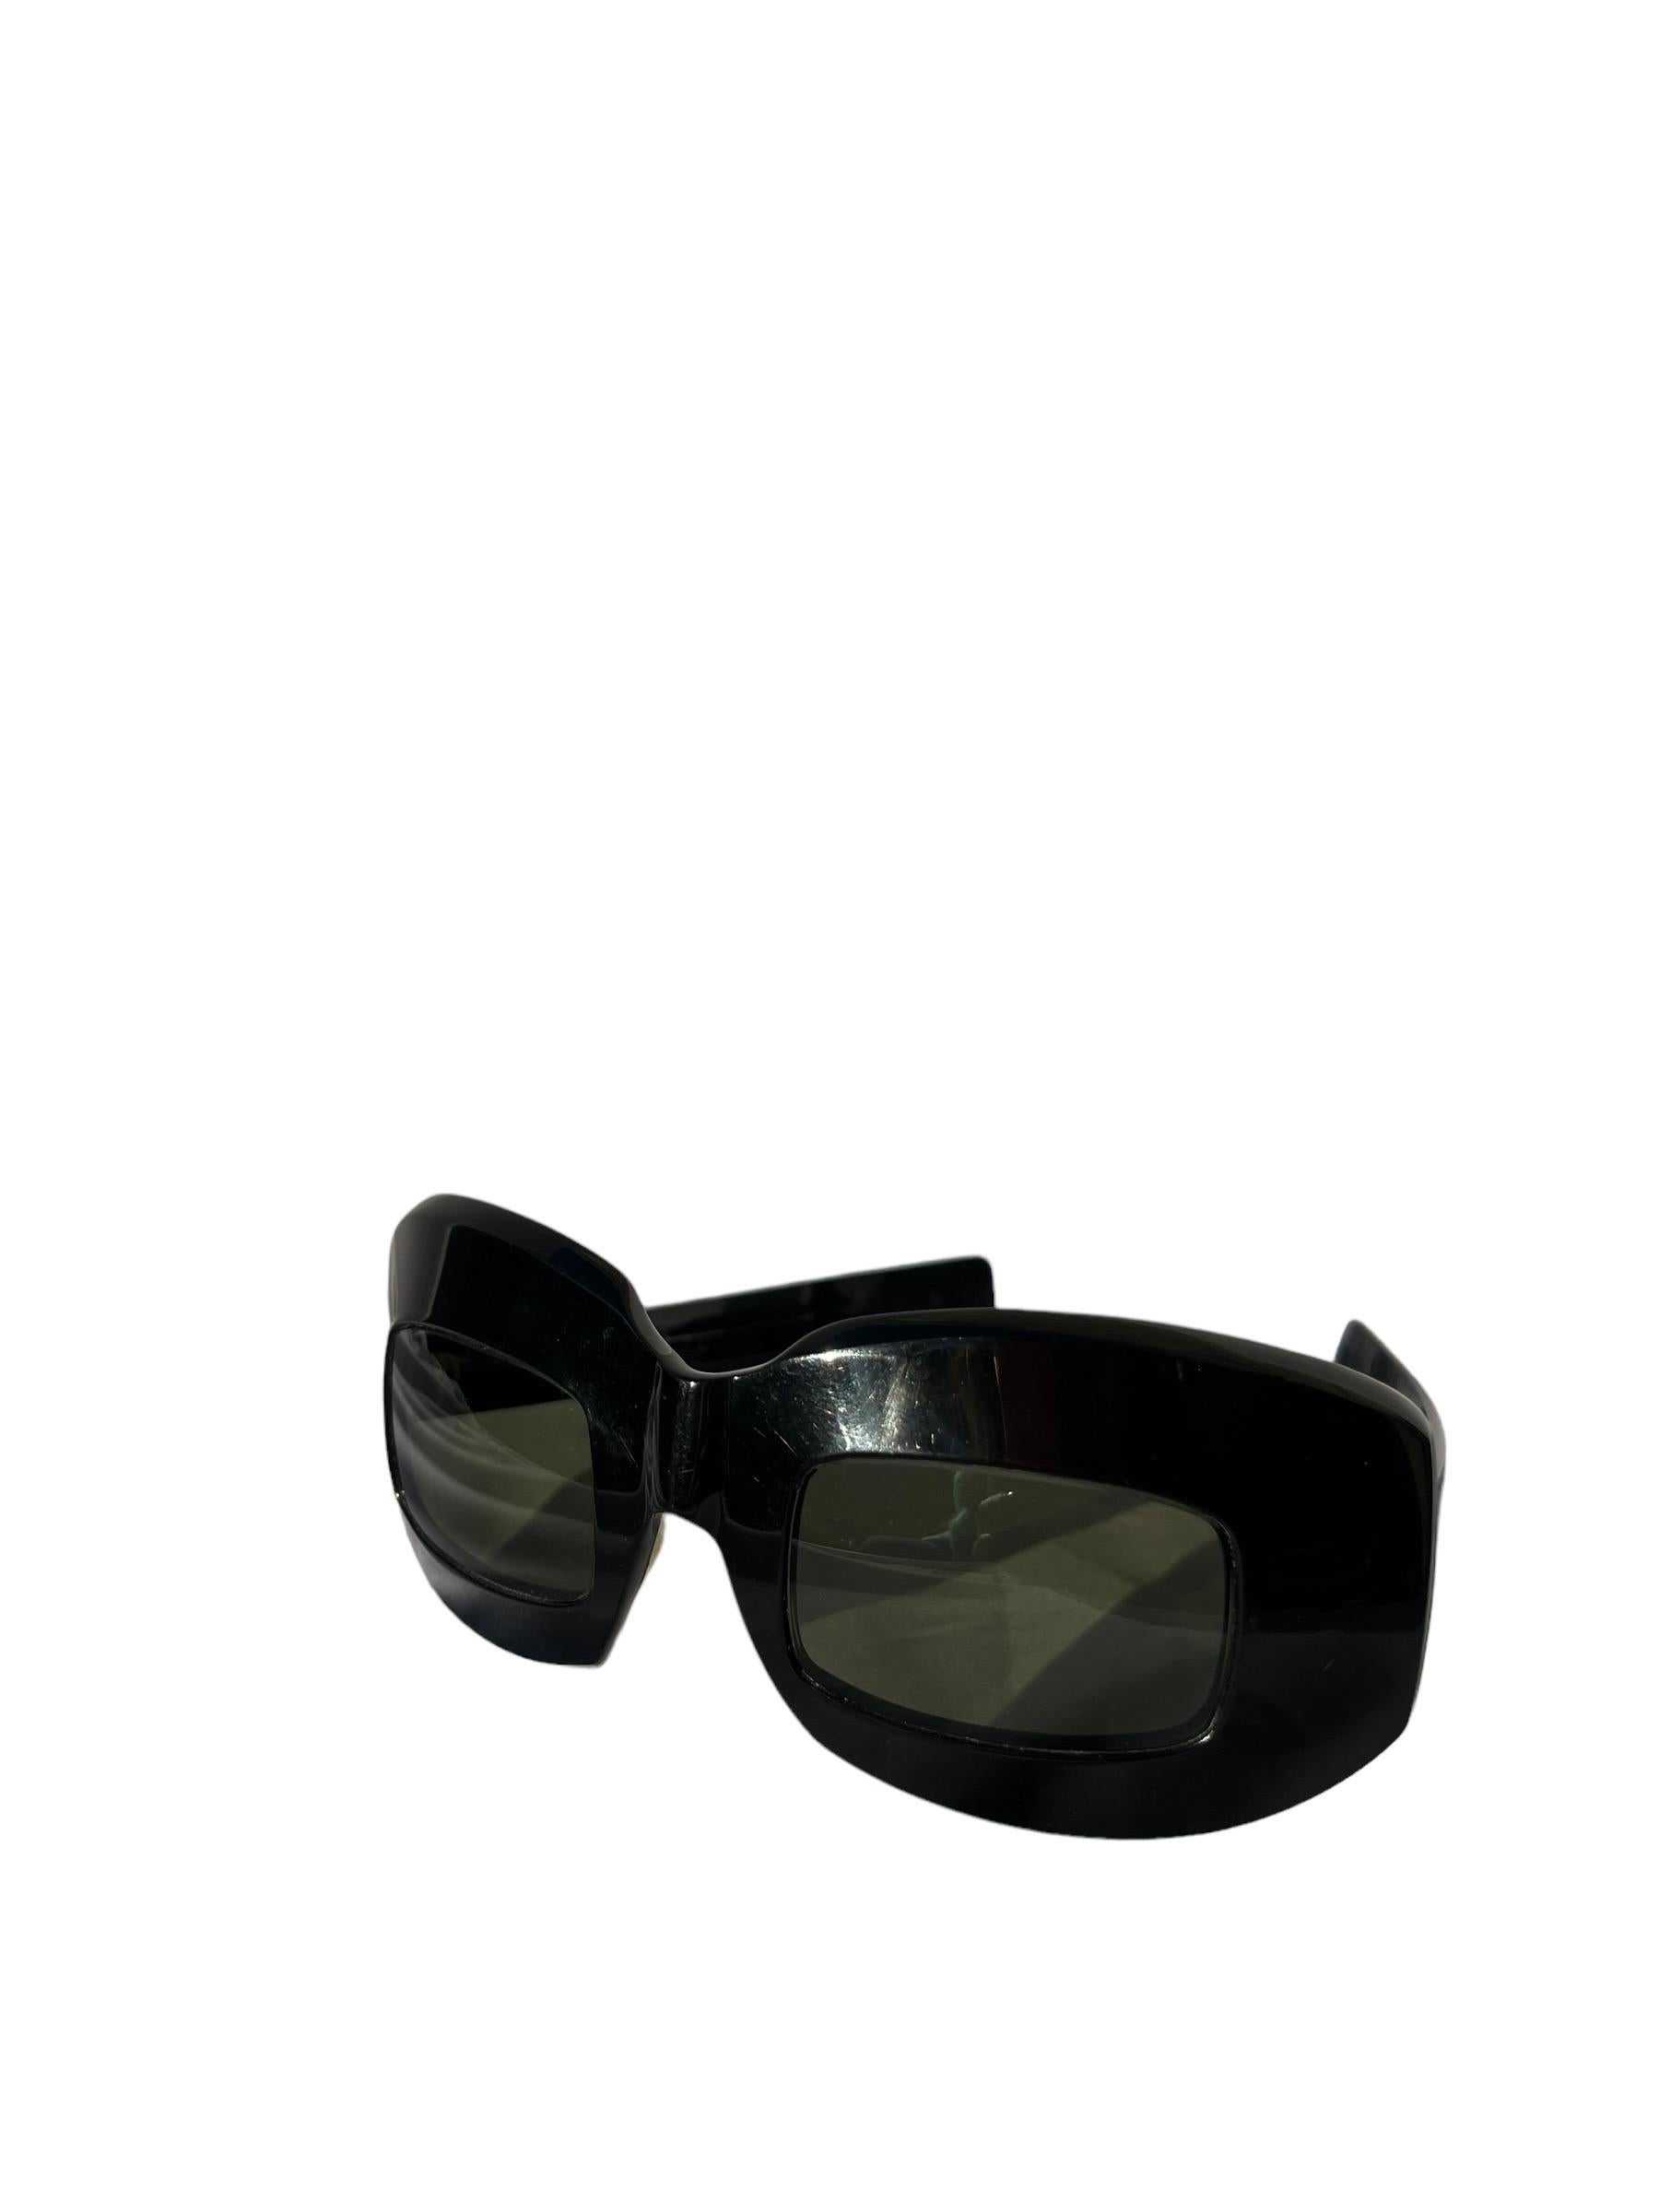 oliver goldsmith sunglasses vintage